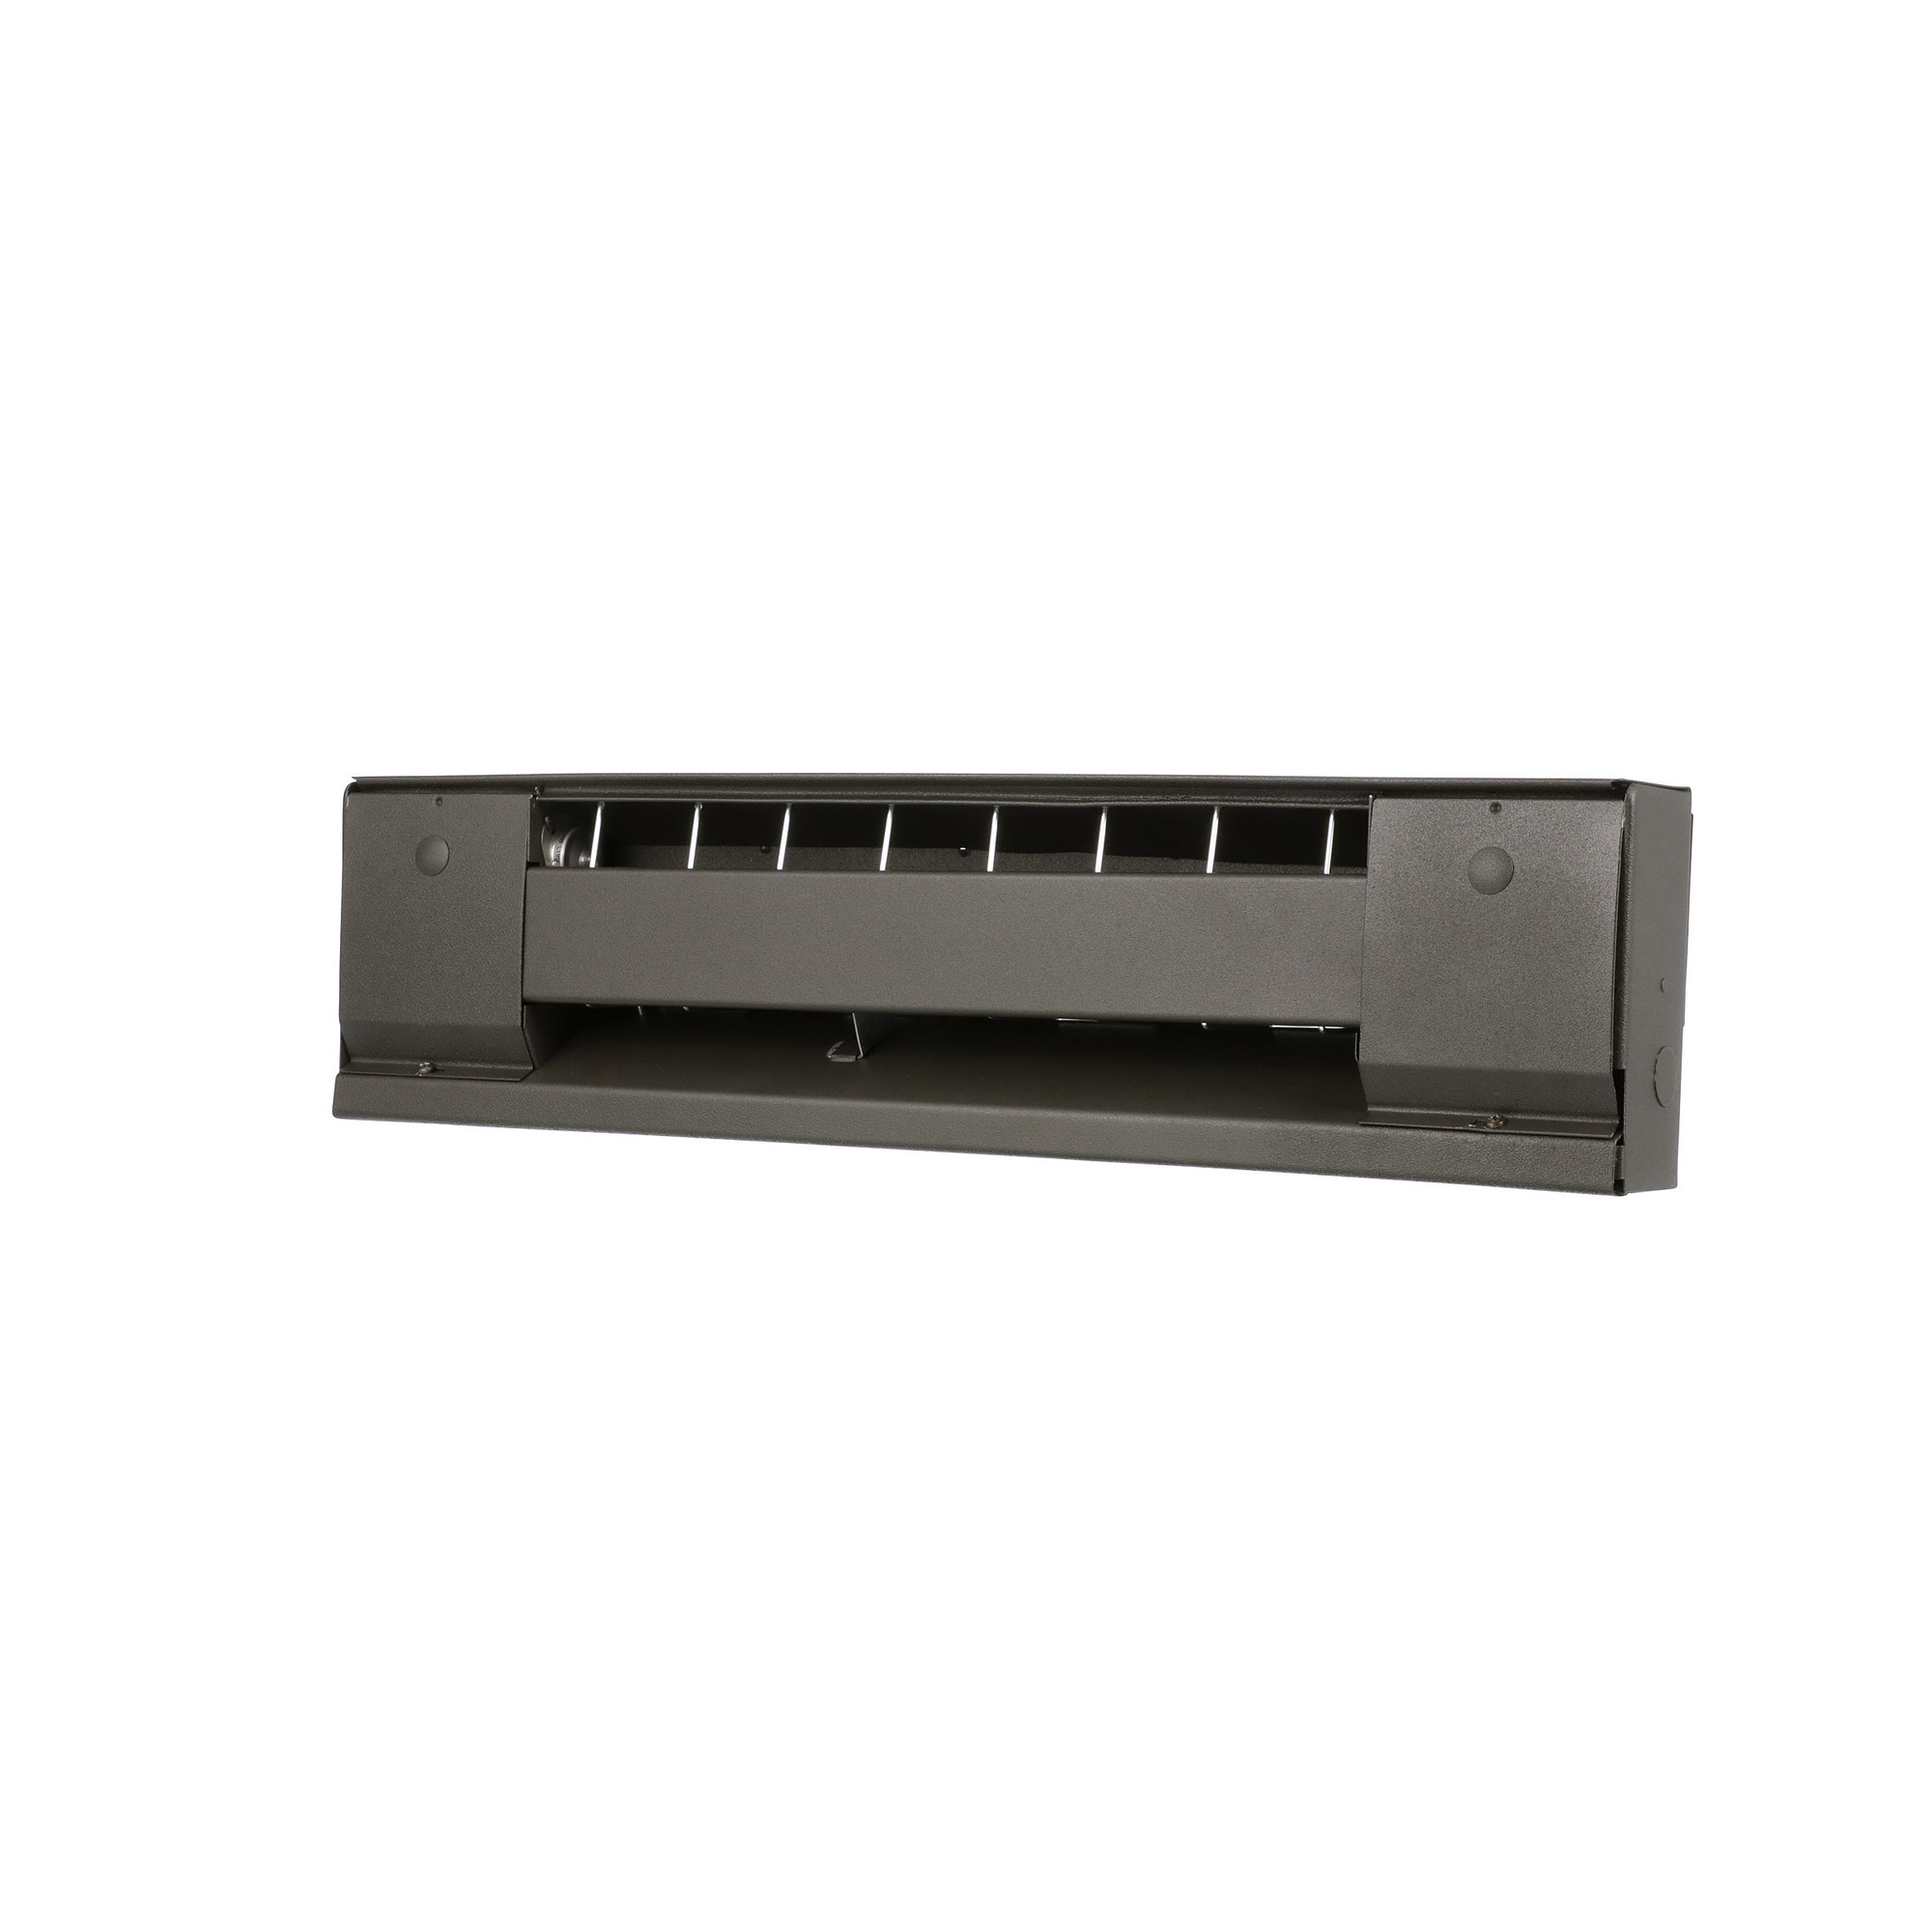 TPI Markel, Baseboard Electric Heater, Model G2903024C